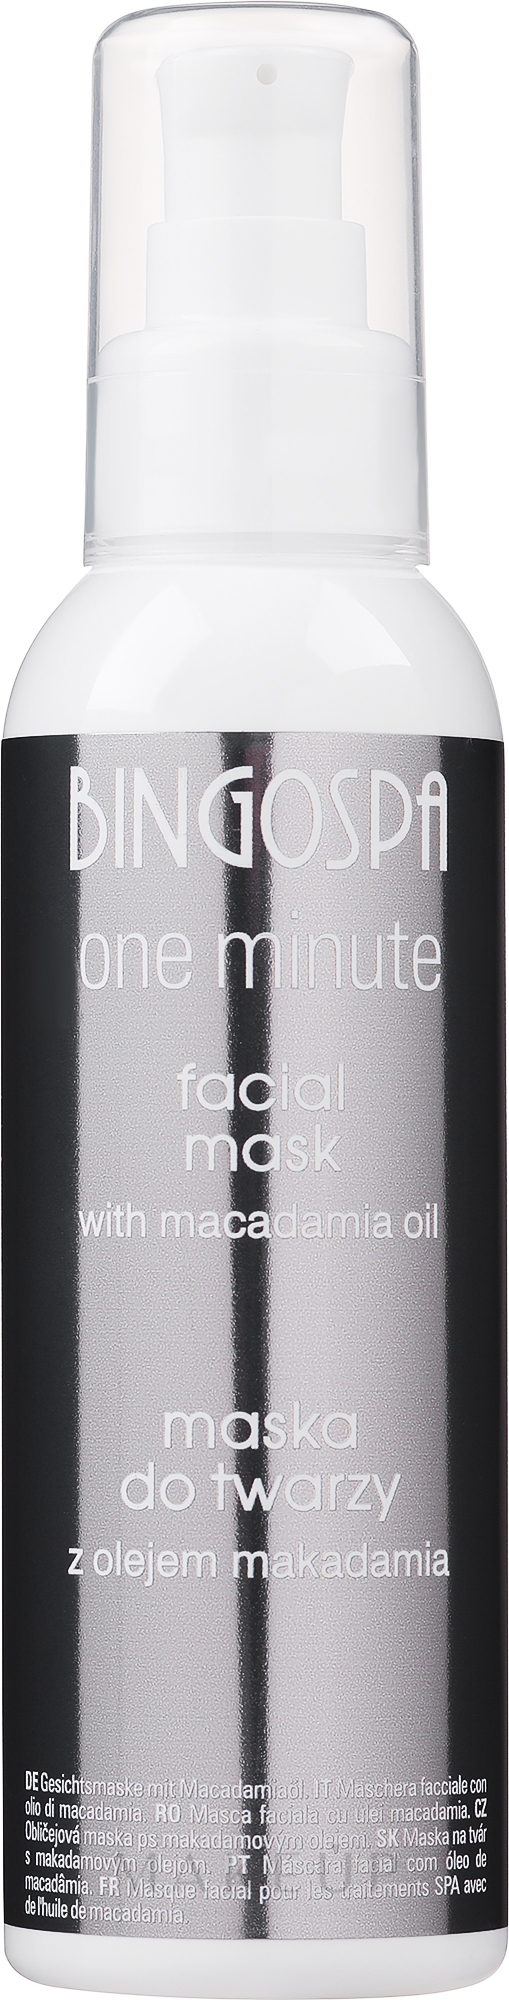 Gesichtsmaske mit Macadamiaöl - BingoSpa Mask For SPA 100% Macadamia Oil — Bild 150 g